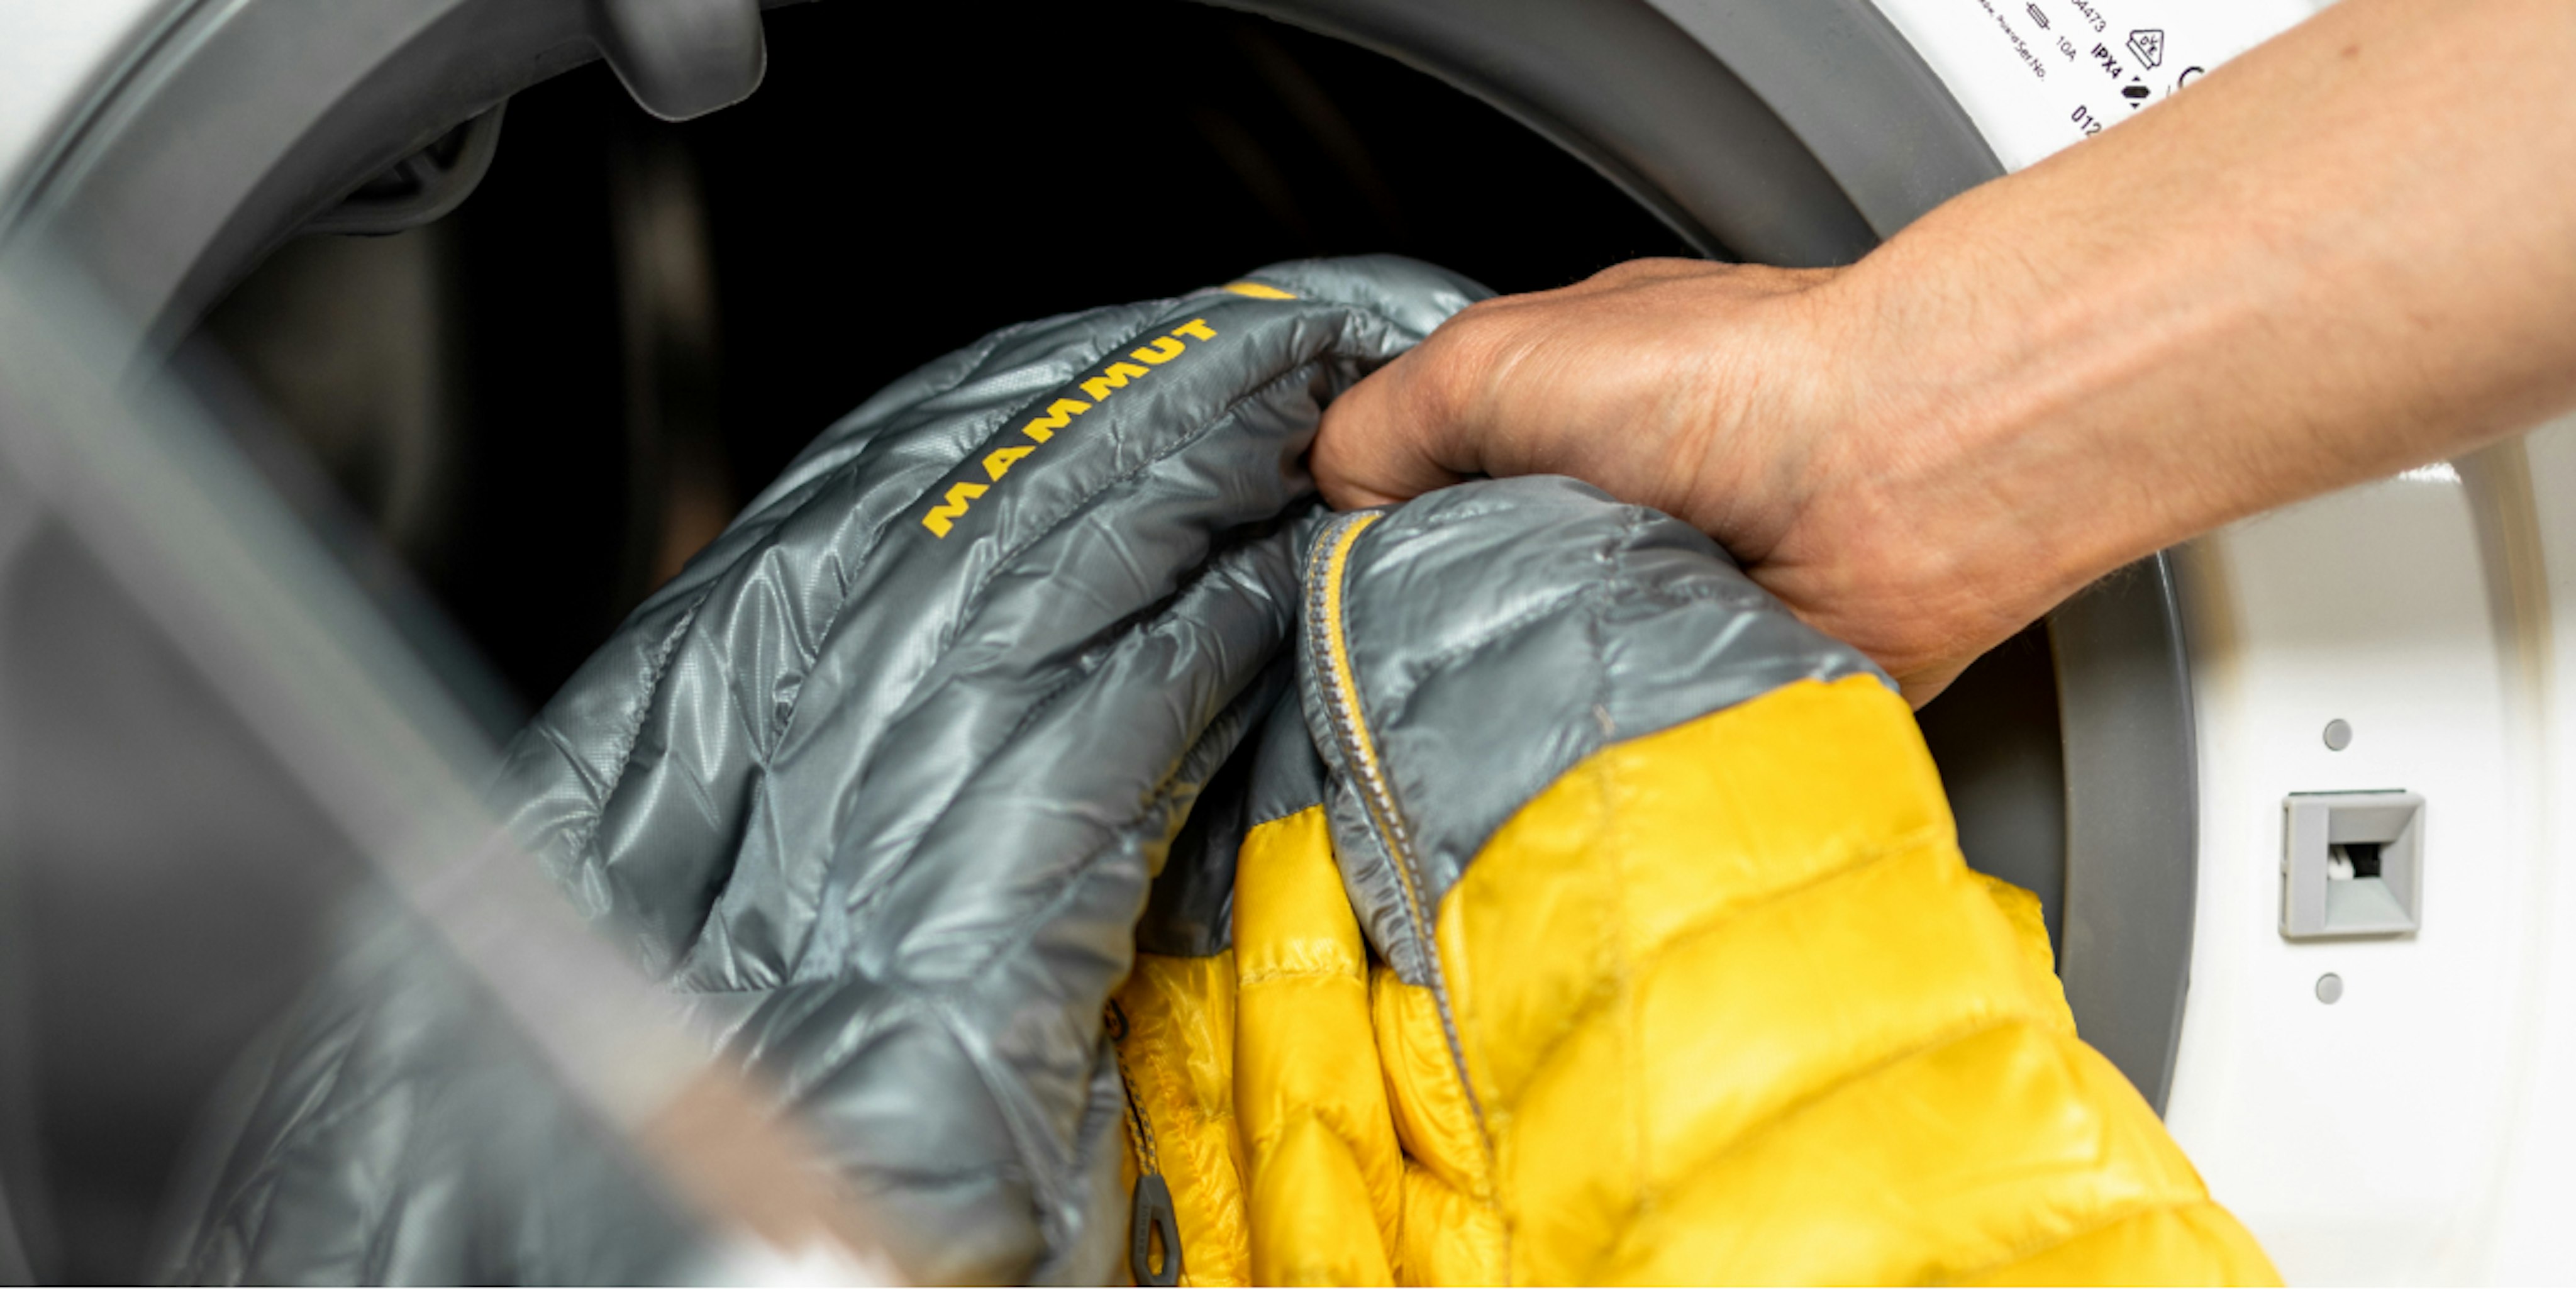 Person washing a yellow and gray Mammut jacket in a washing machine.